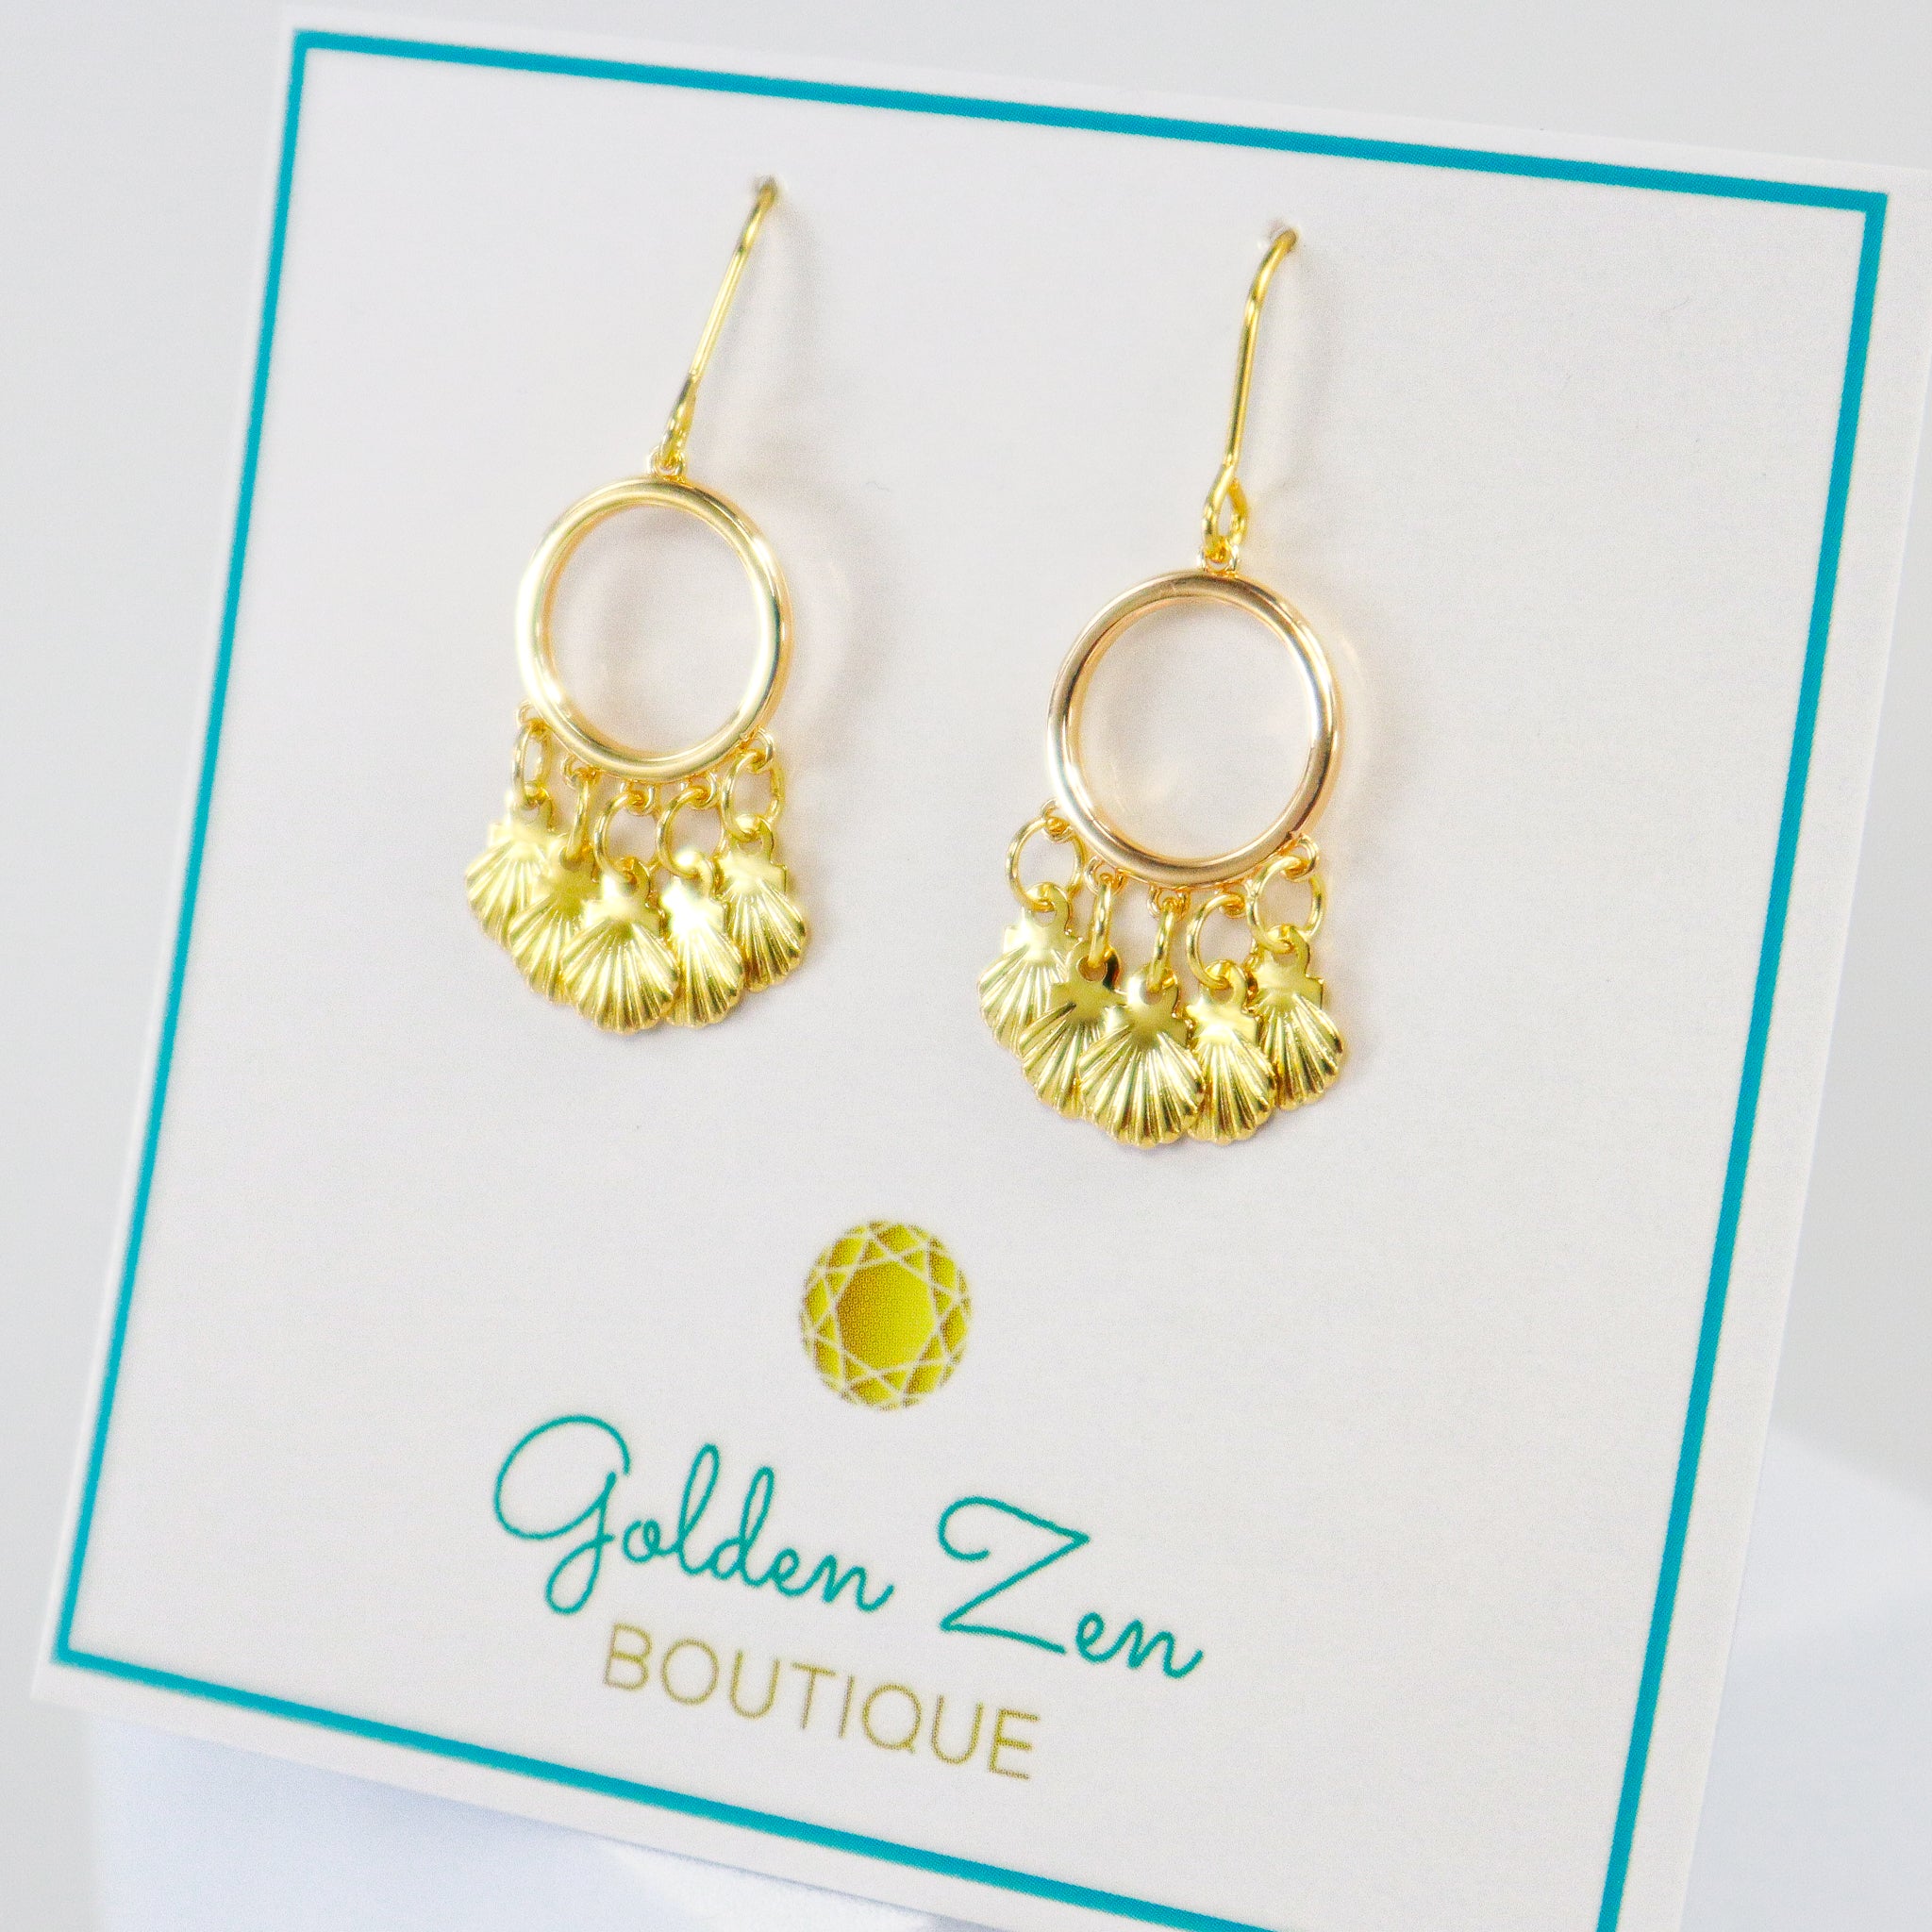 O’ahu Gold Scallop Shell Earrings